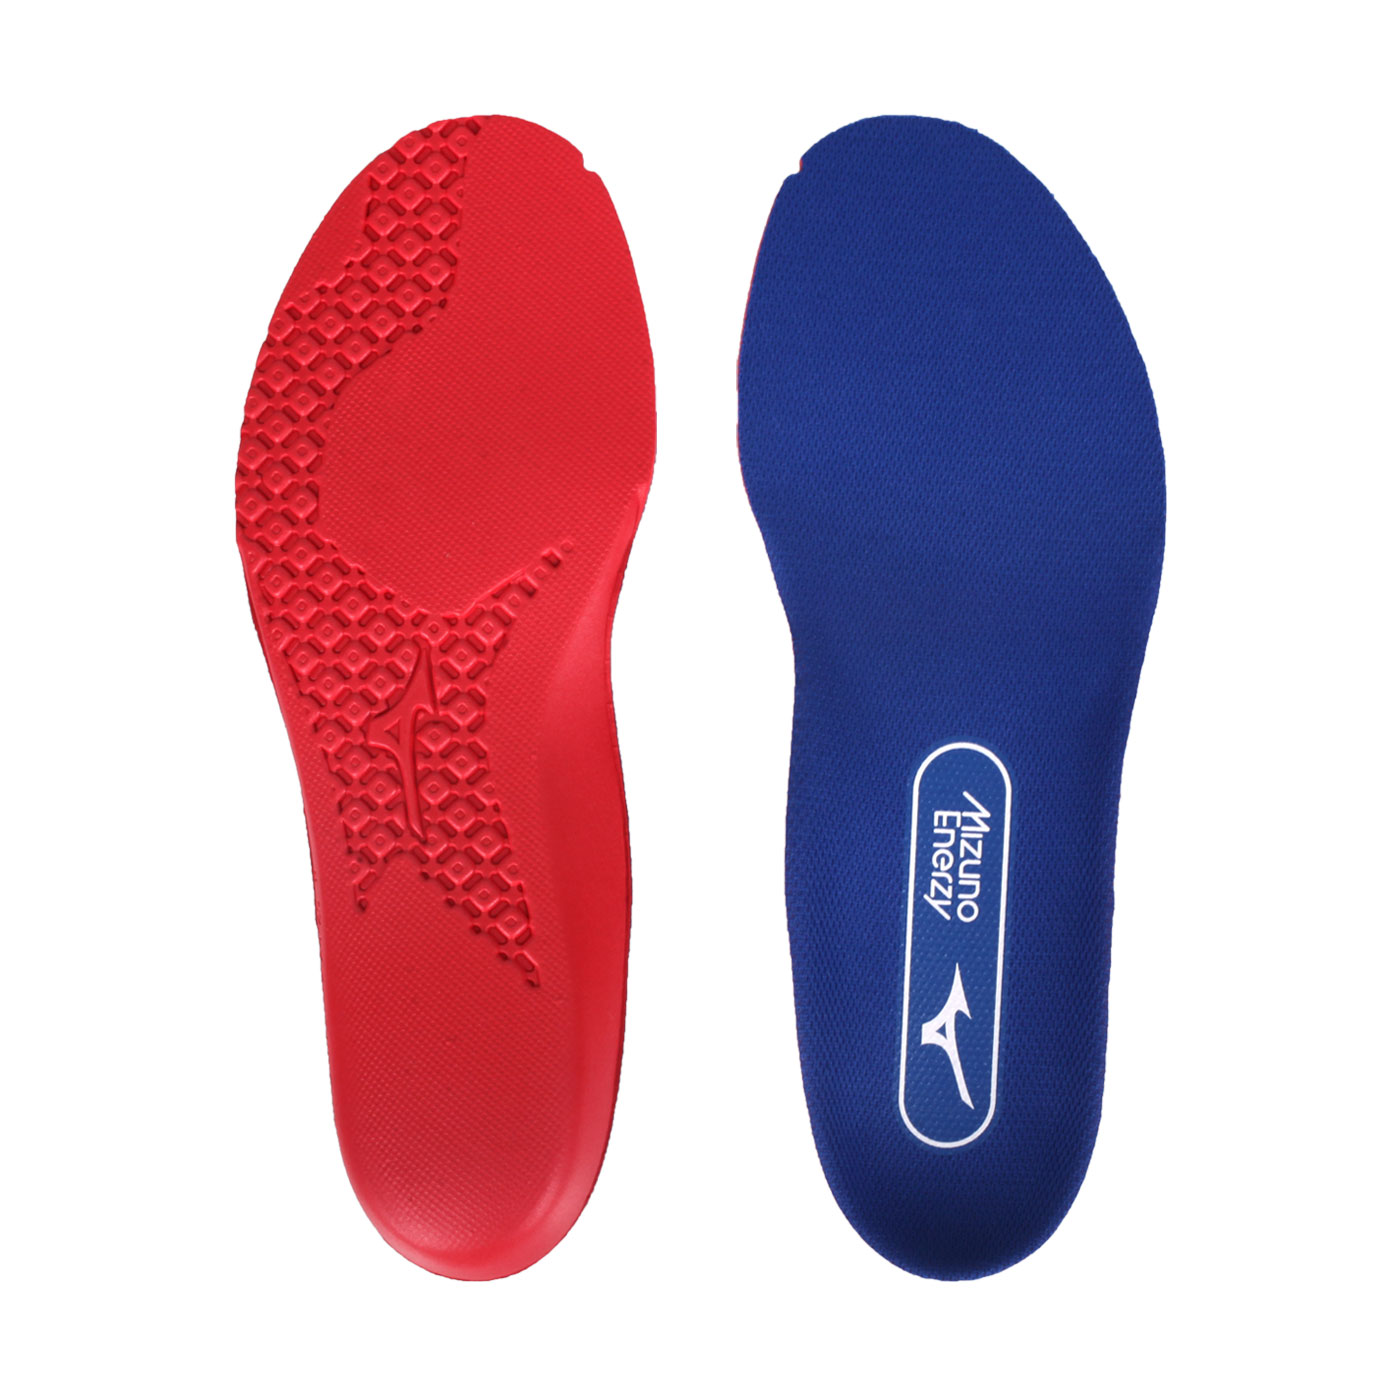 MIZUNO 網球鞋墊 61GZ220309 - 藍紅